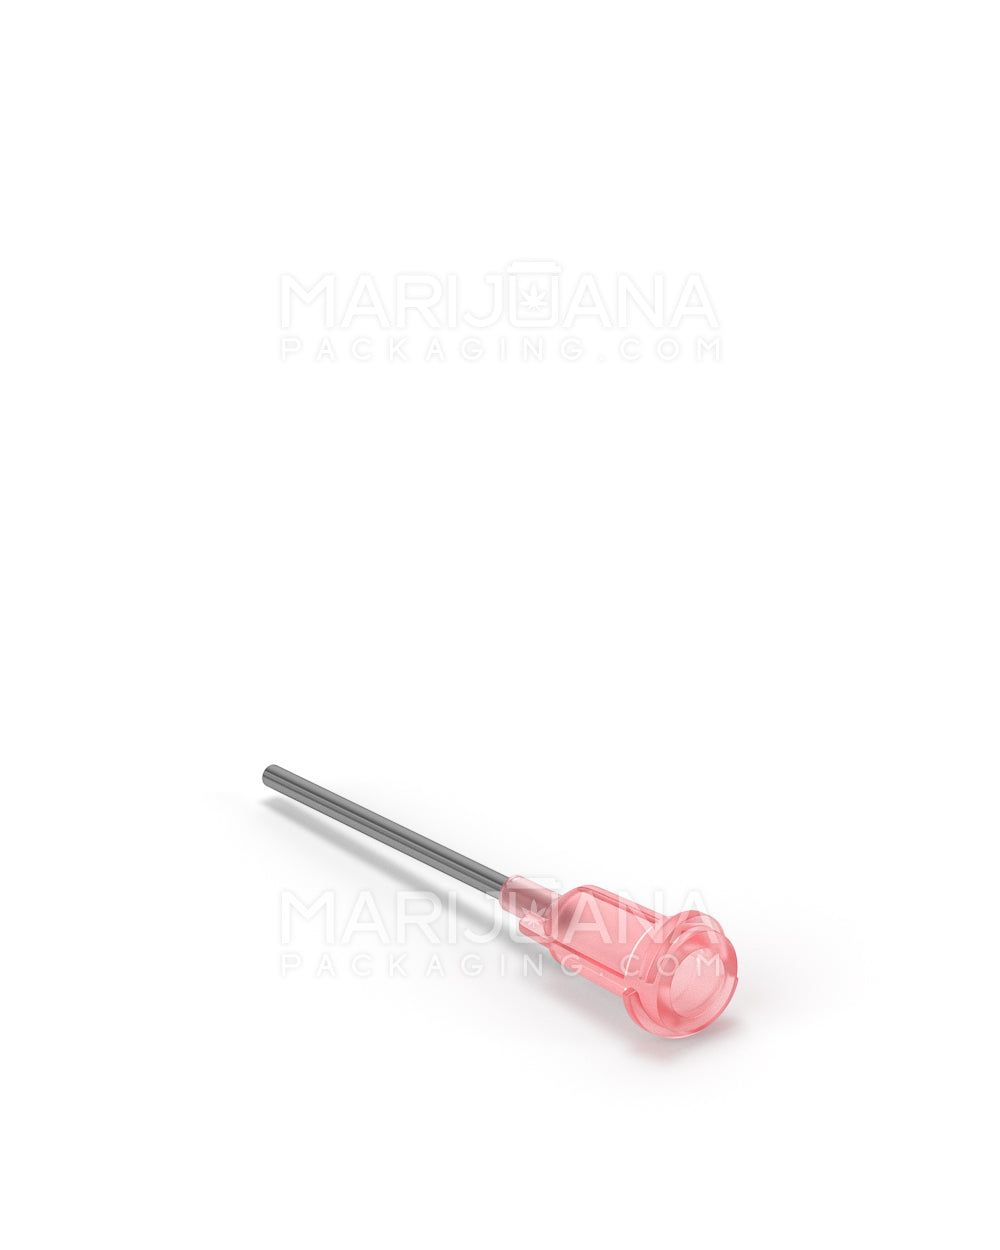 Pink Replacement Needles | 1in - 18 Gauge - 15 Count - 4